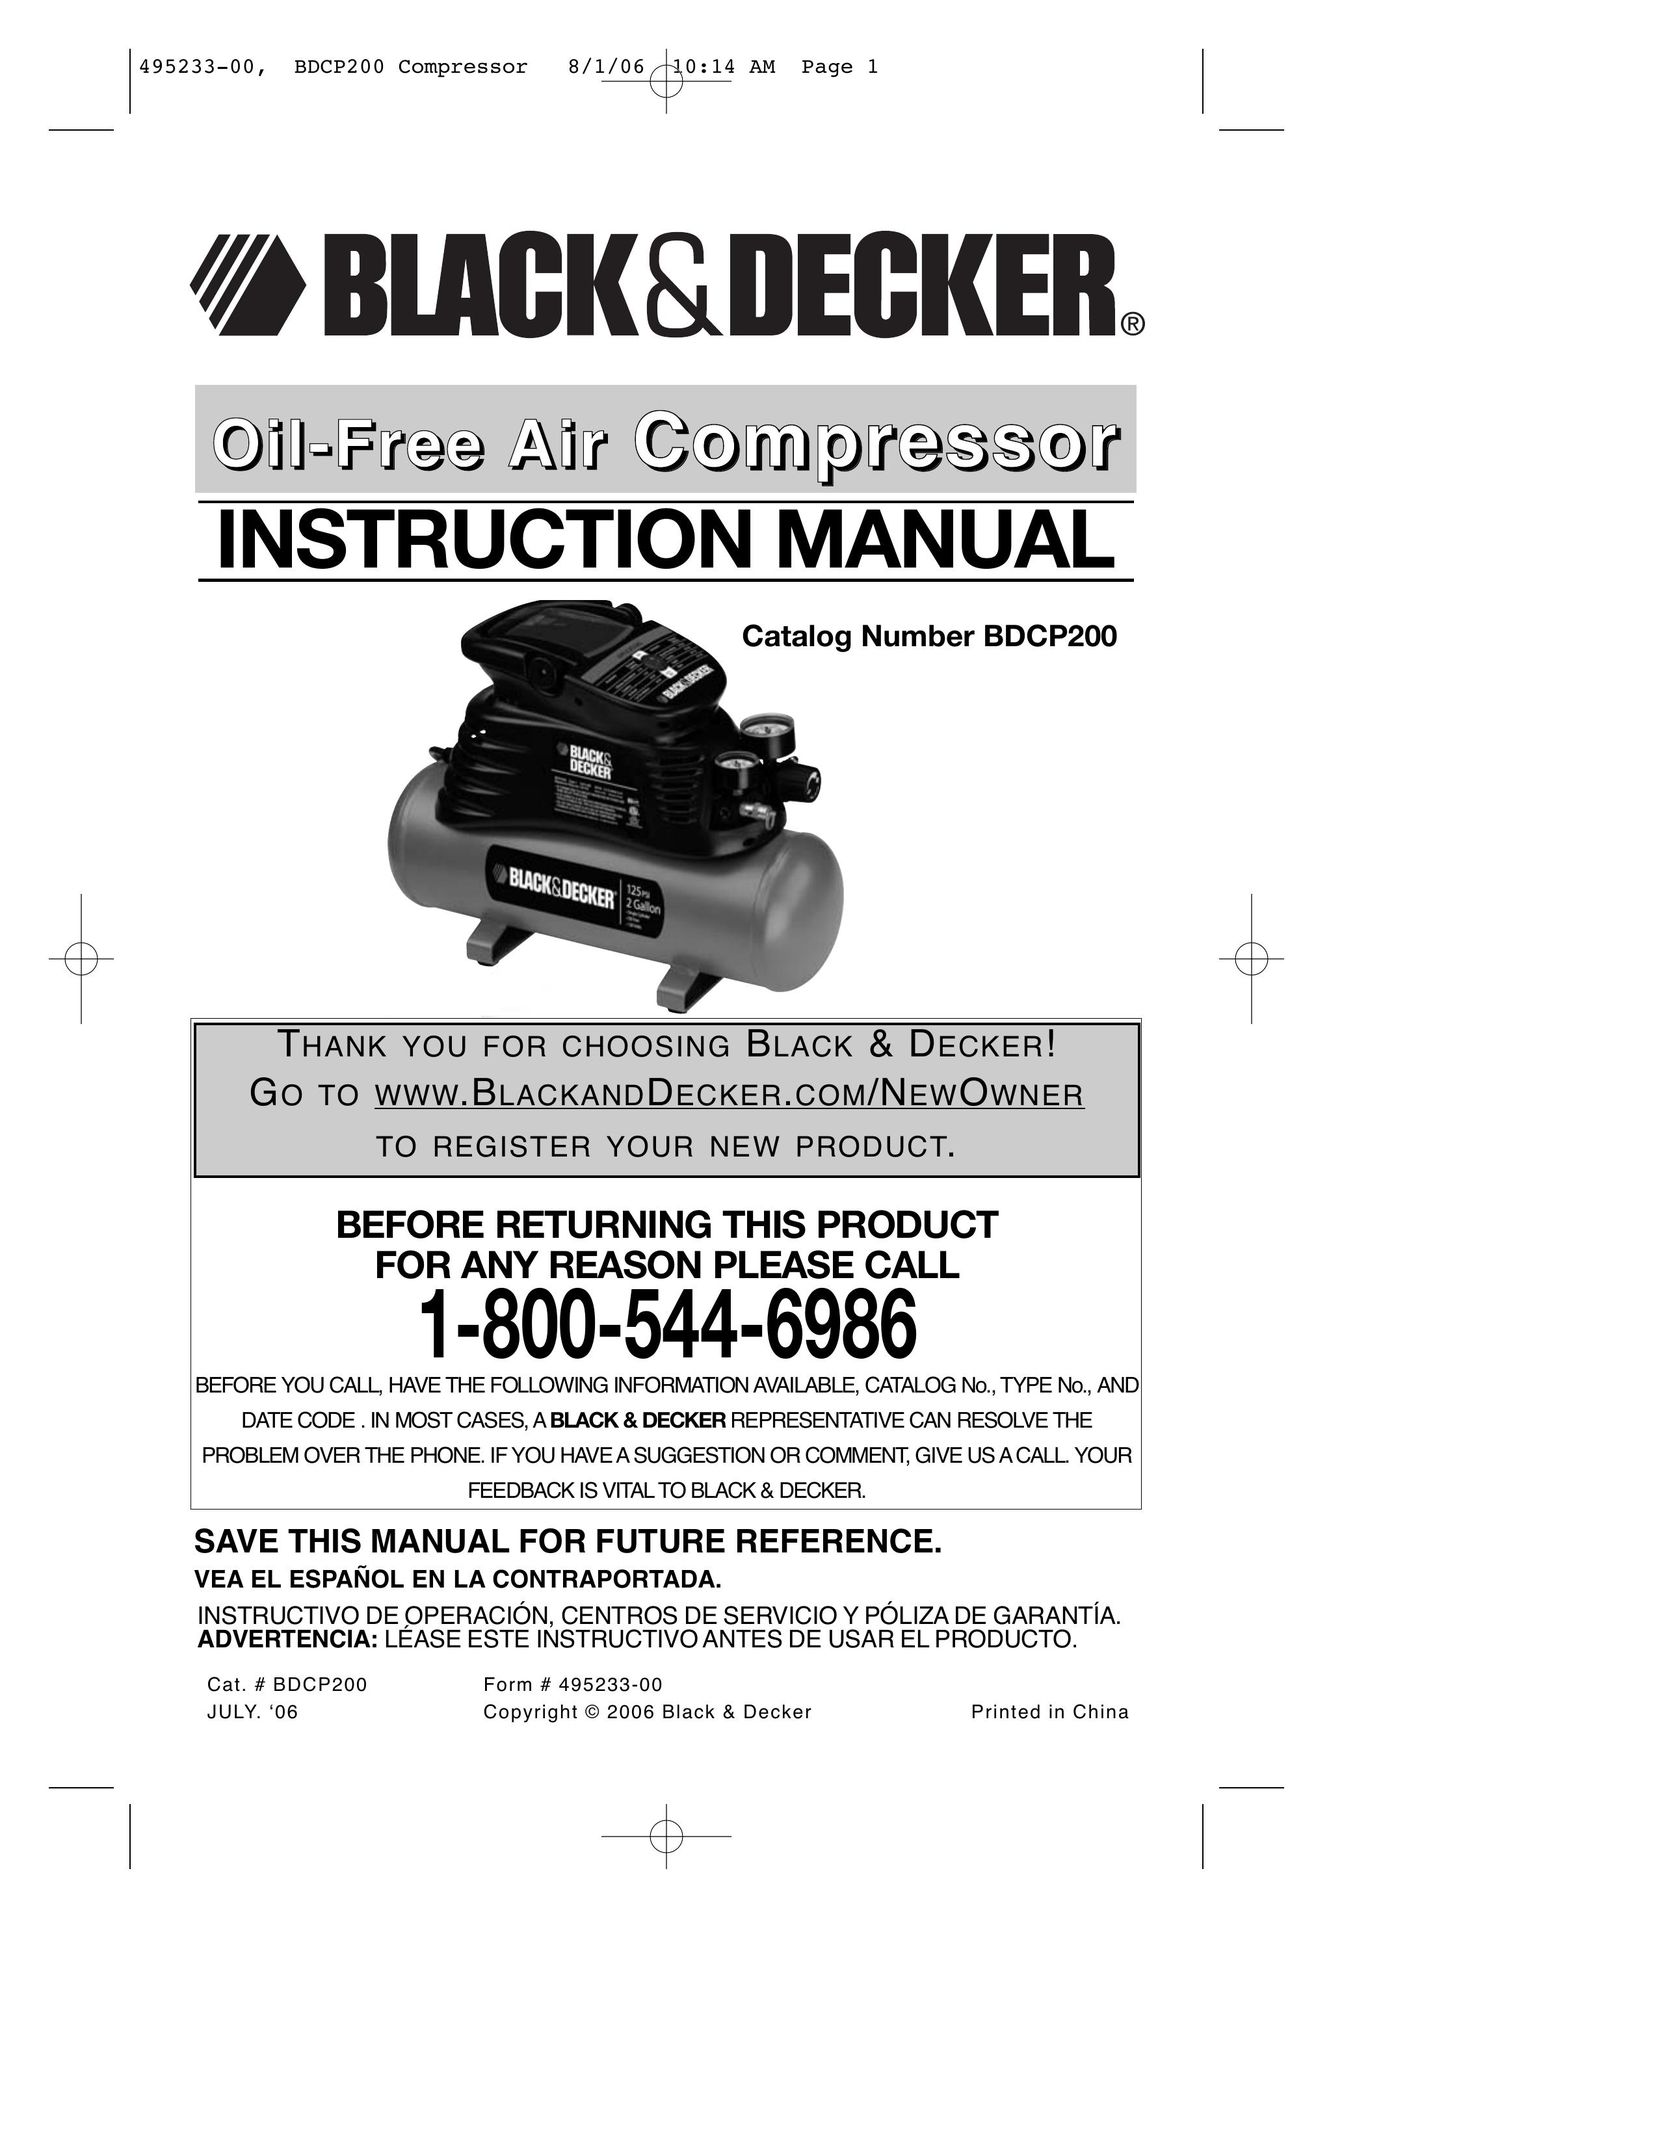 Black & Decker BDCP200 Air Compressor User Manual